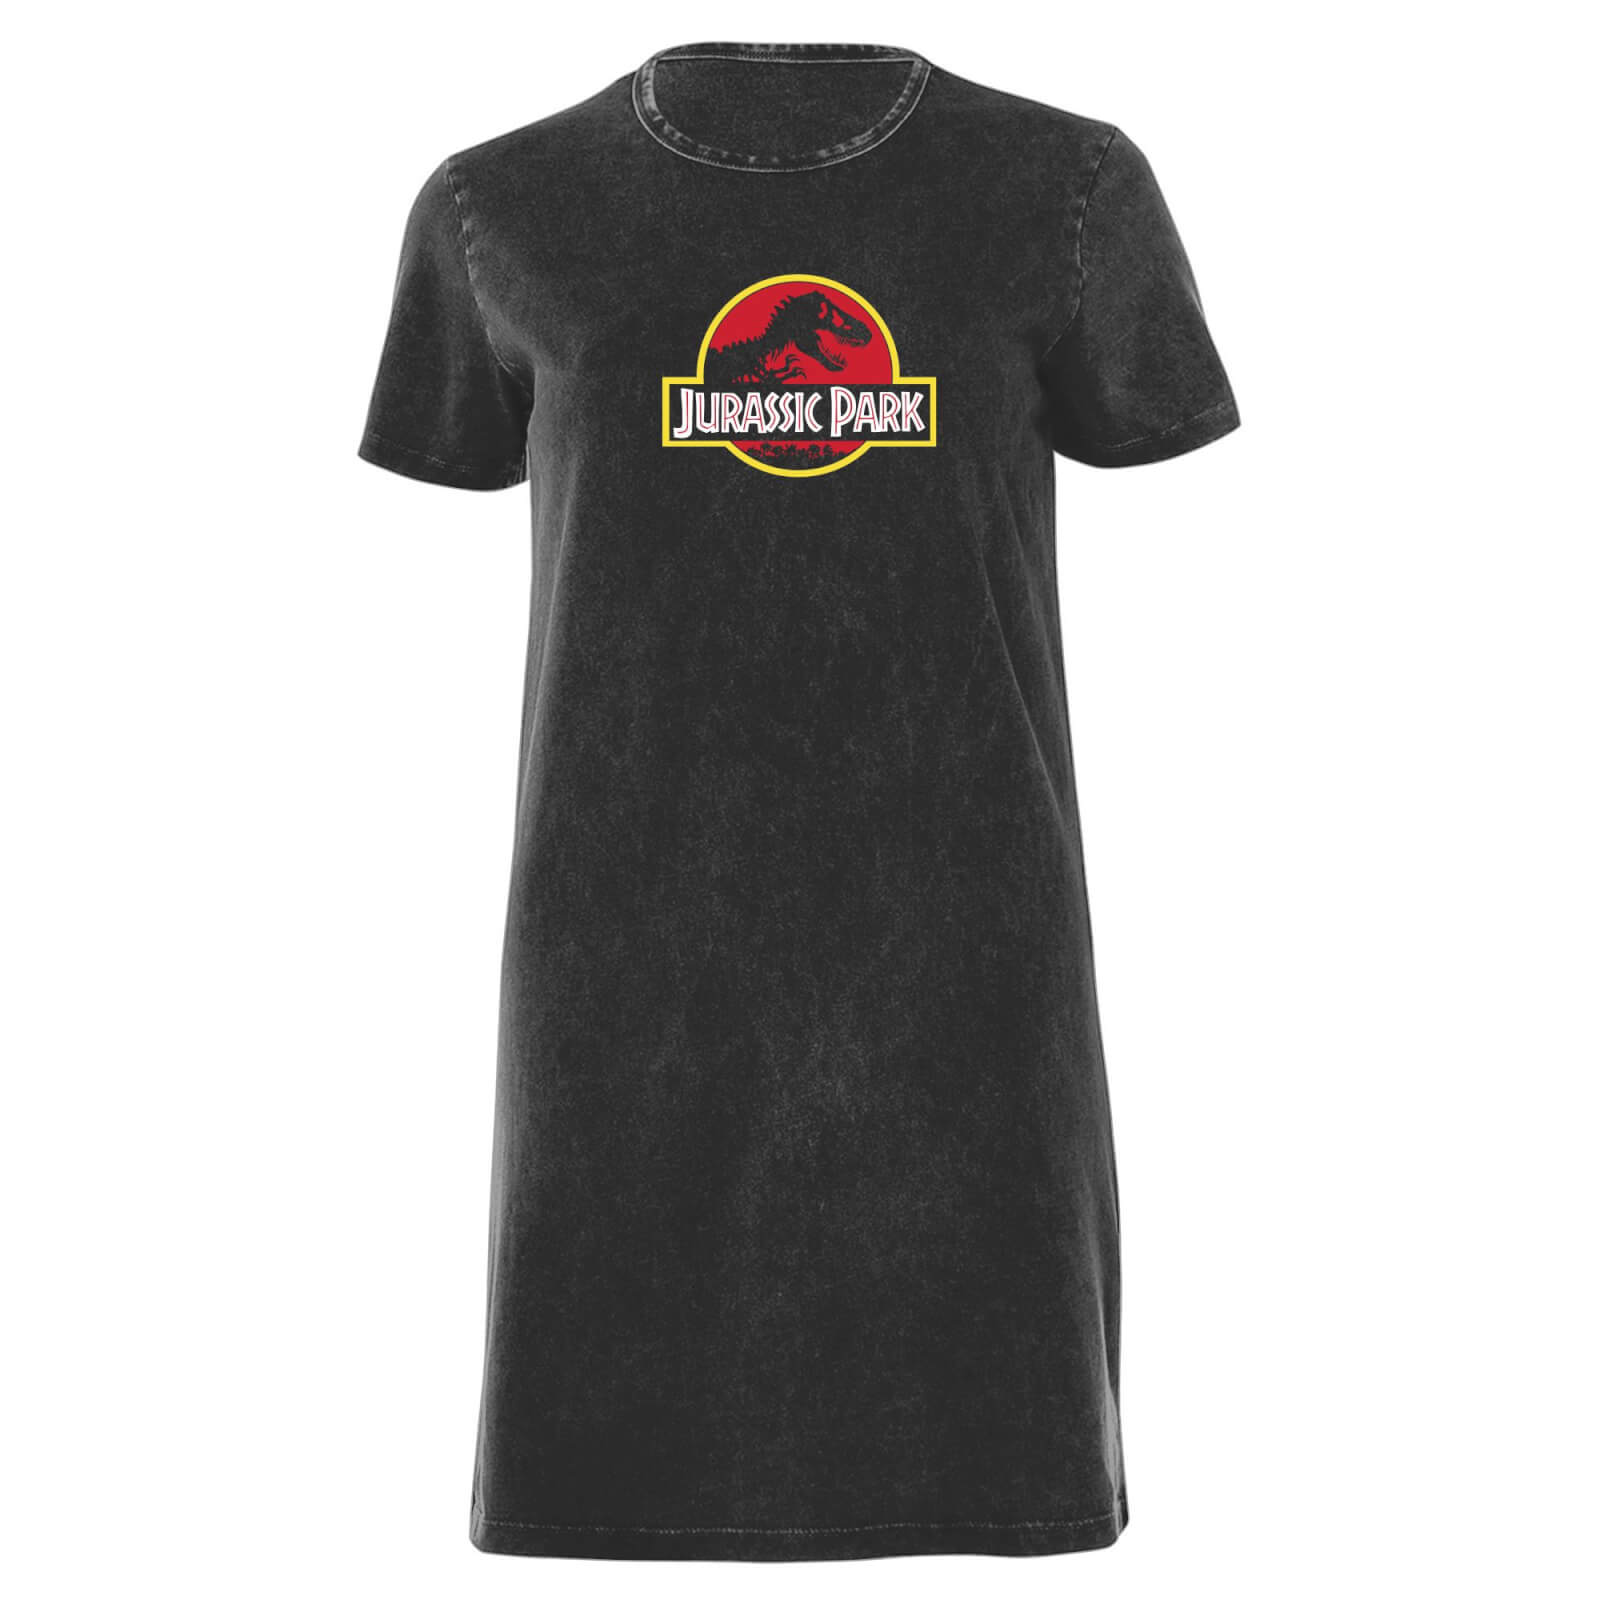 Jurassic Park Classic Women's T-Shirt Dress - Black Acid Wash - S